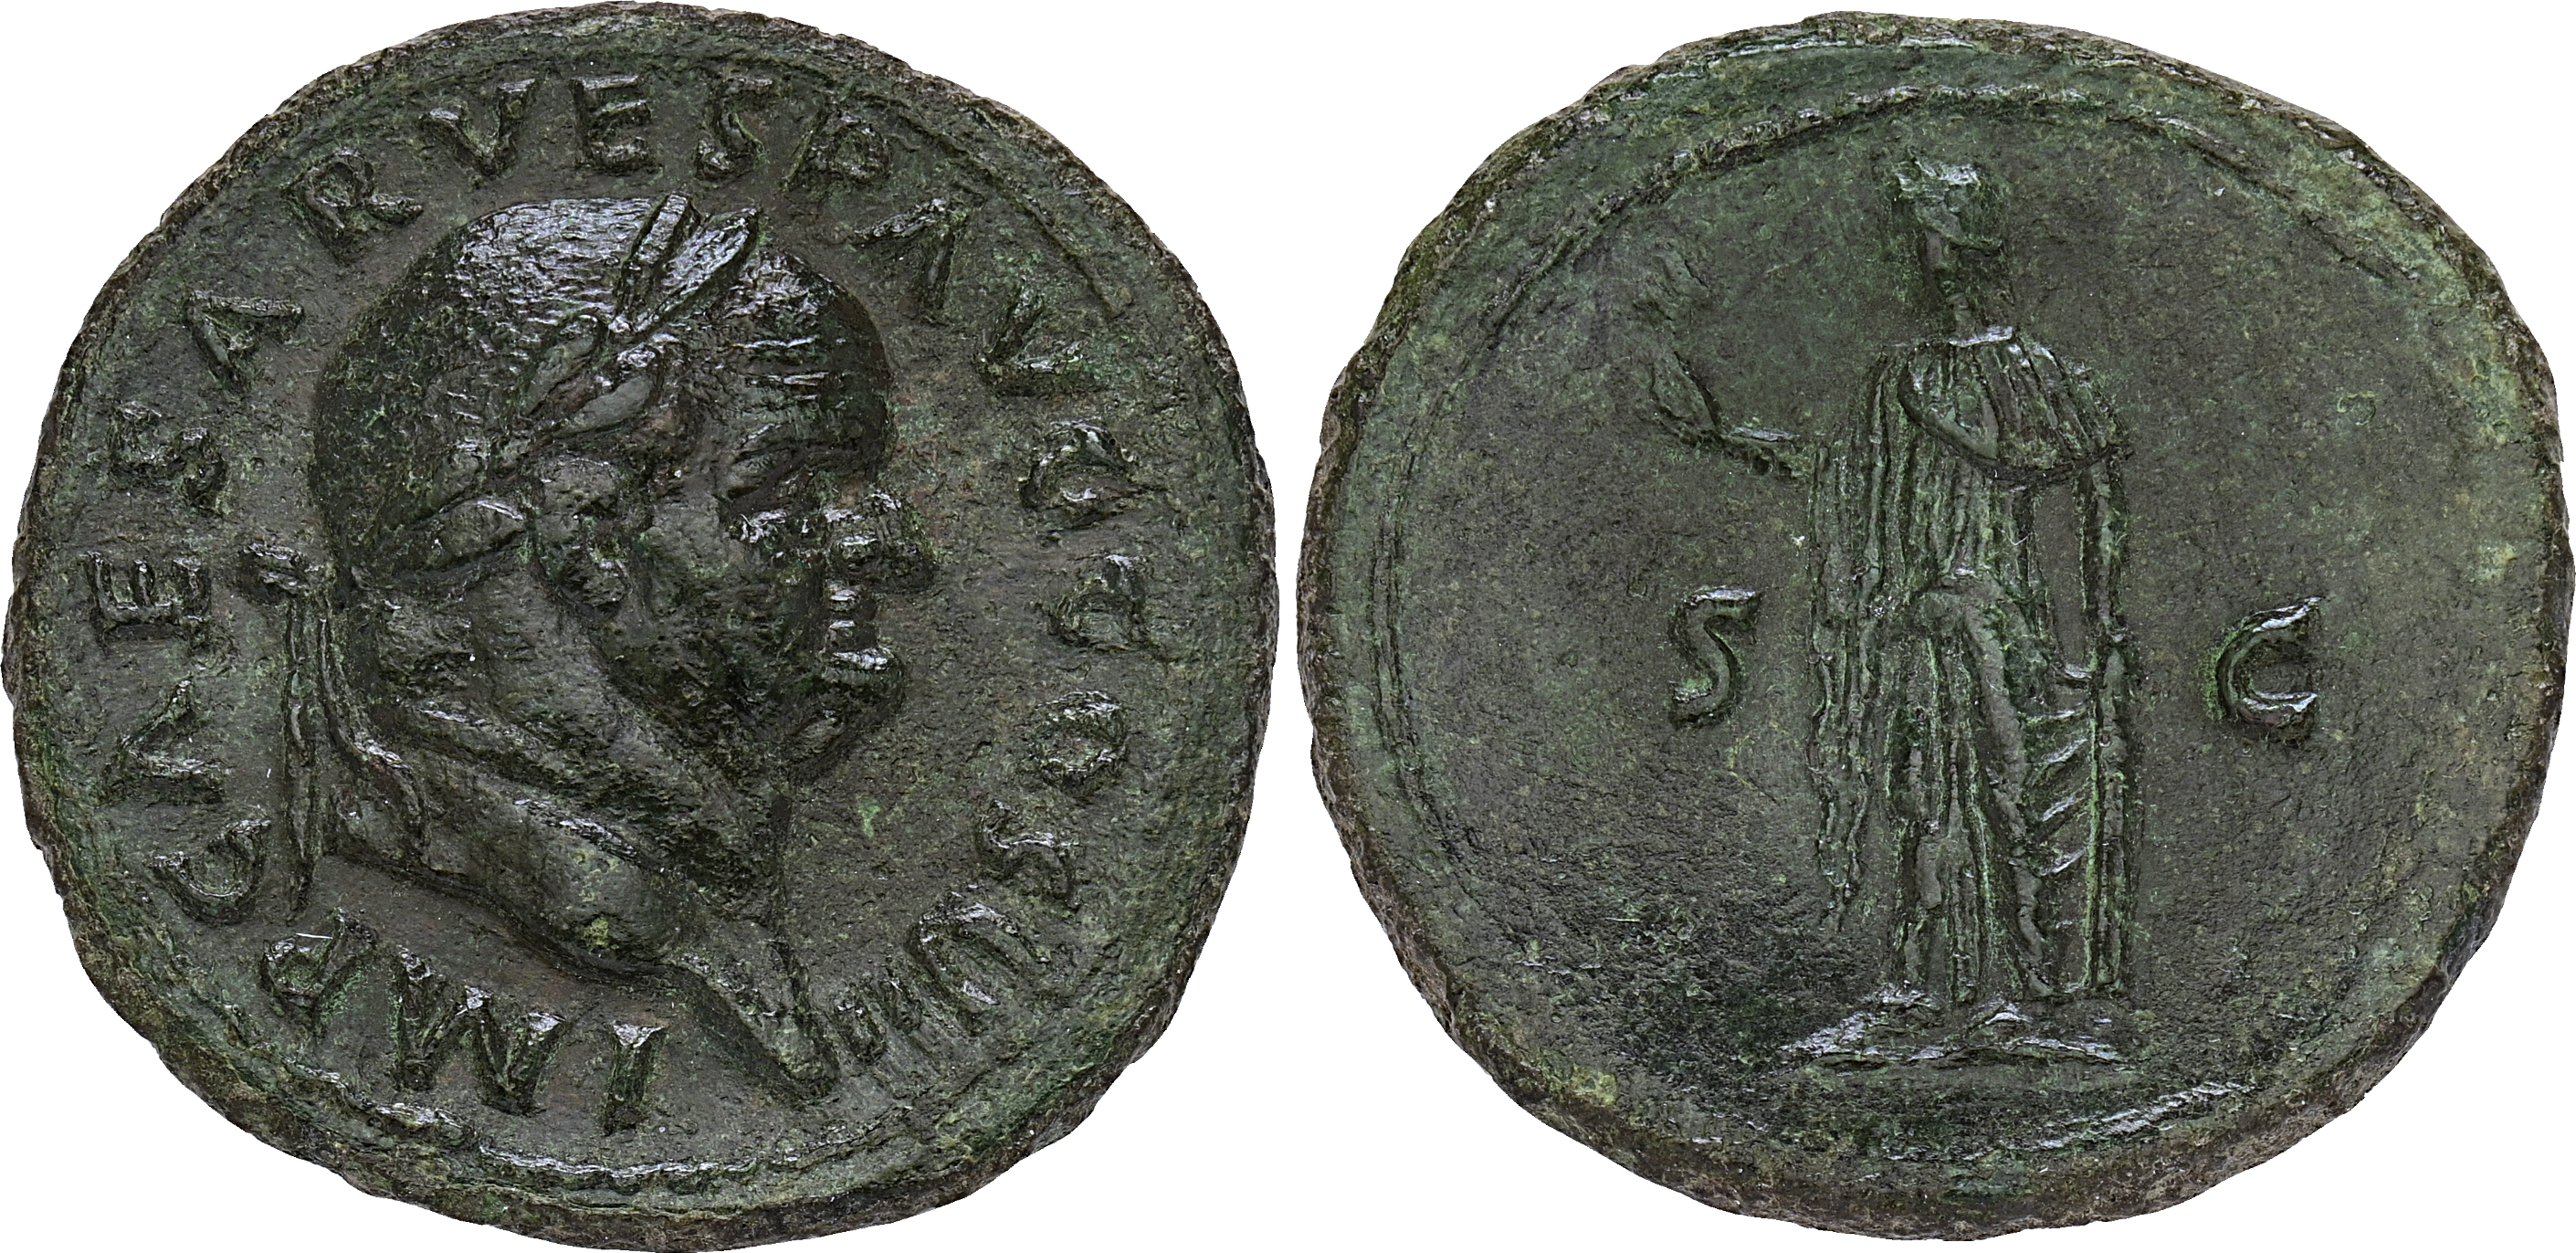 44 год до н э. Монеты Антиох IX Кизикский. Монета древний Рим динарий. Монеты Пантикапея сатир. Монеты Боспорского царства Пантикапей.